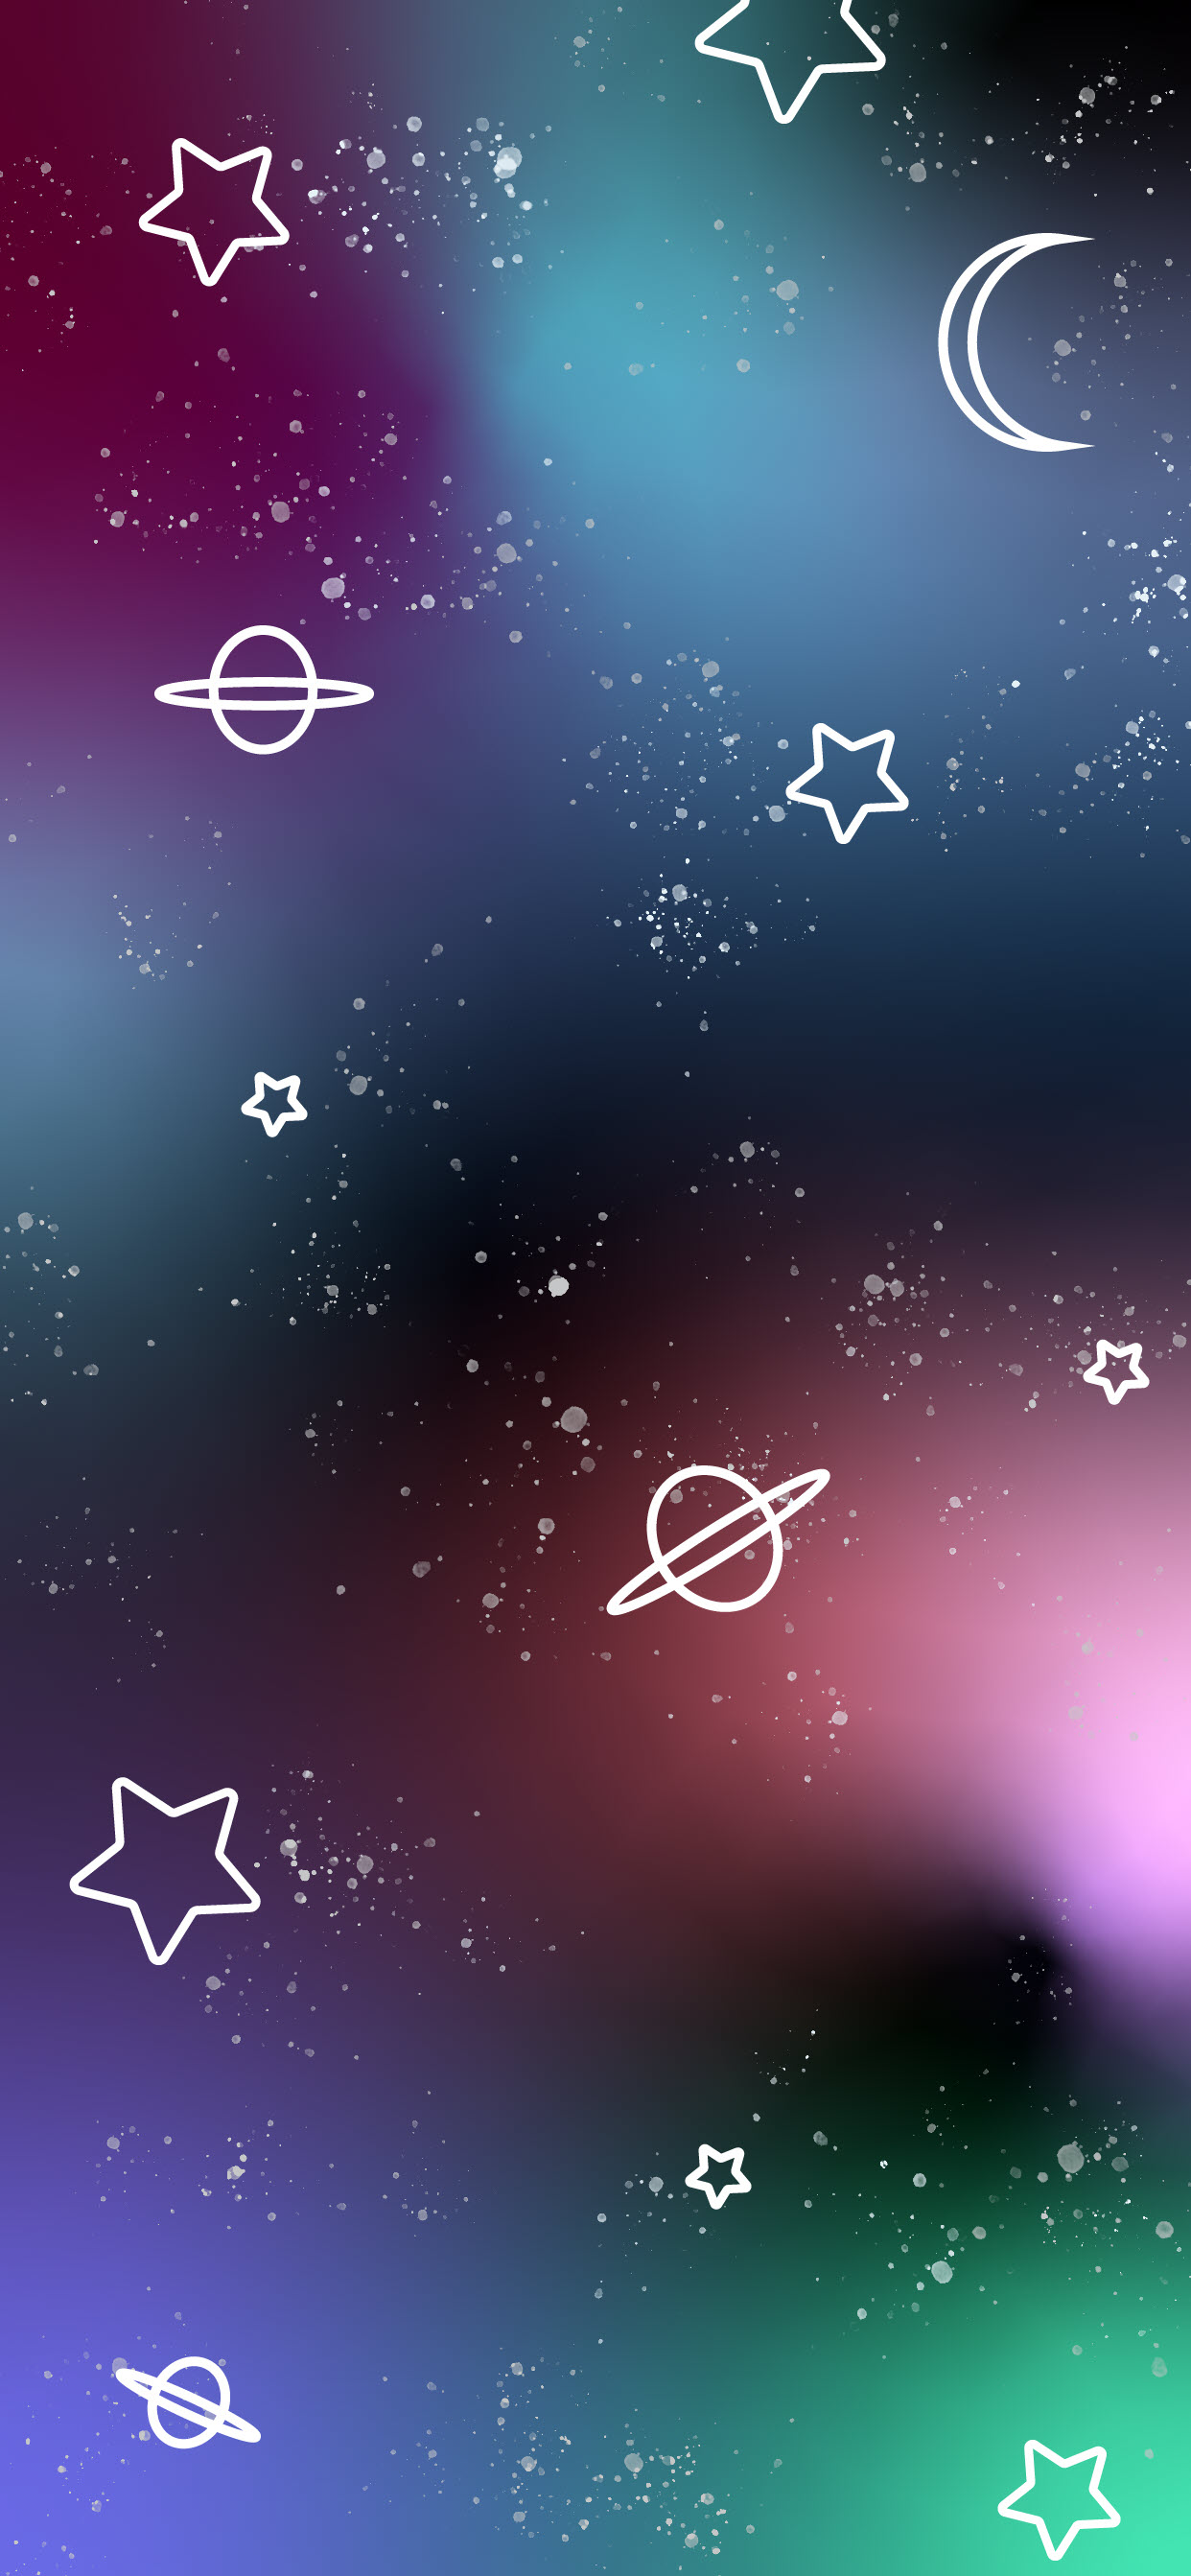 Ảnh nền vũ trụ cute cho iPhone X